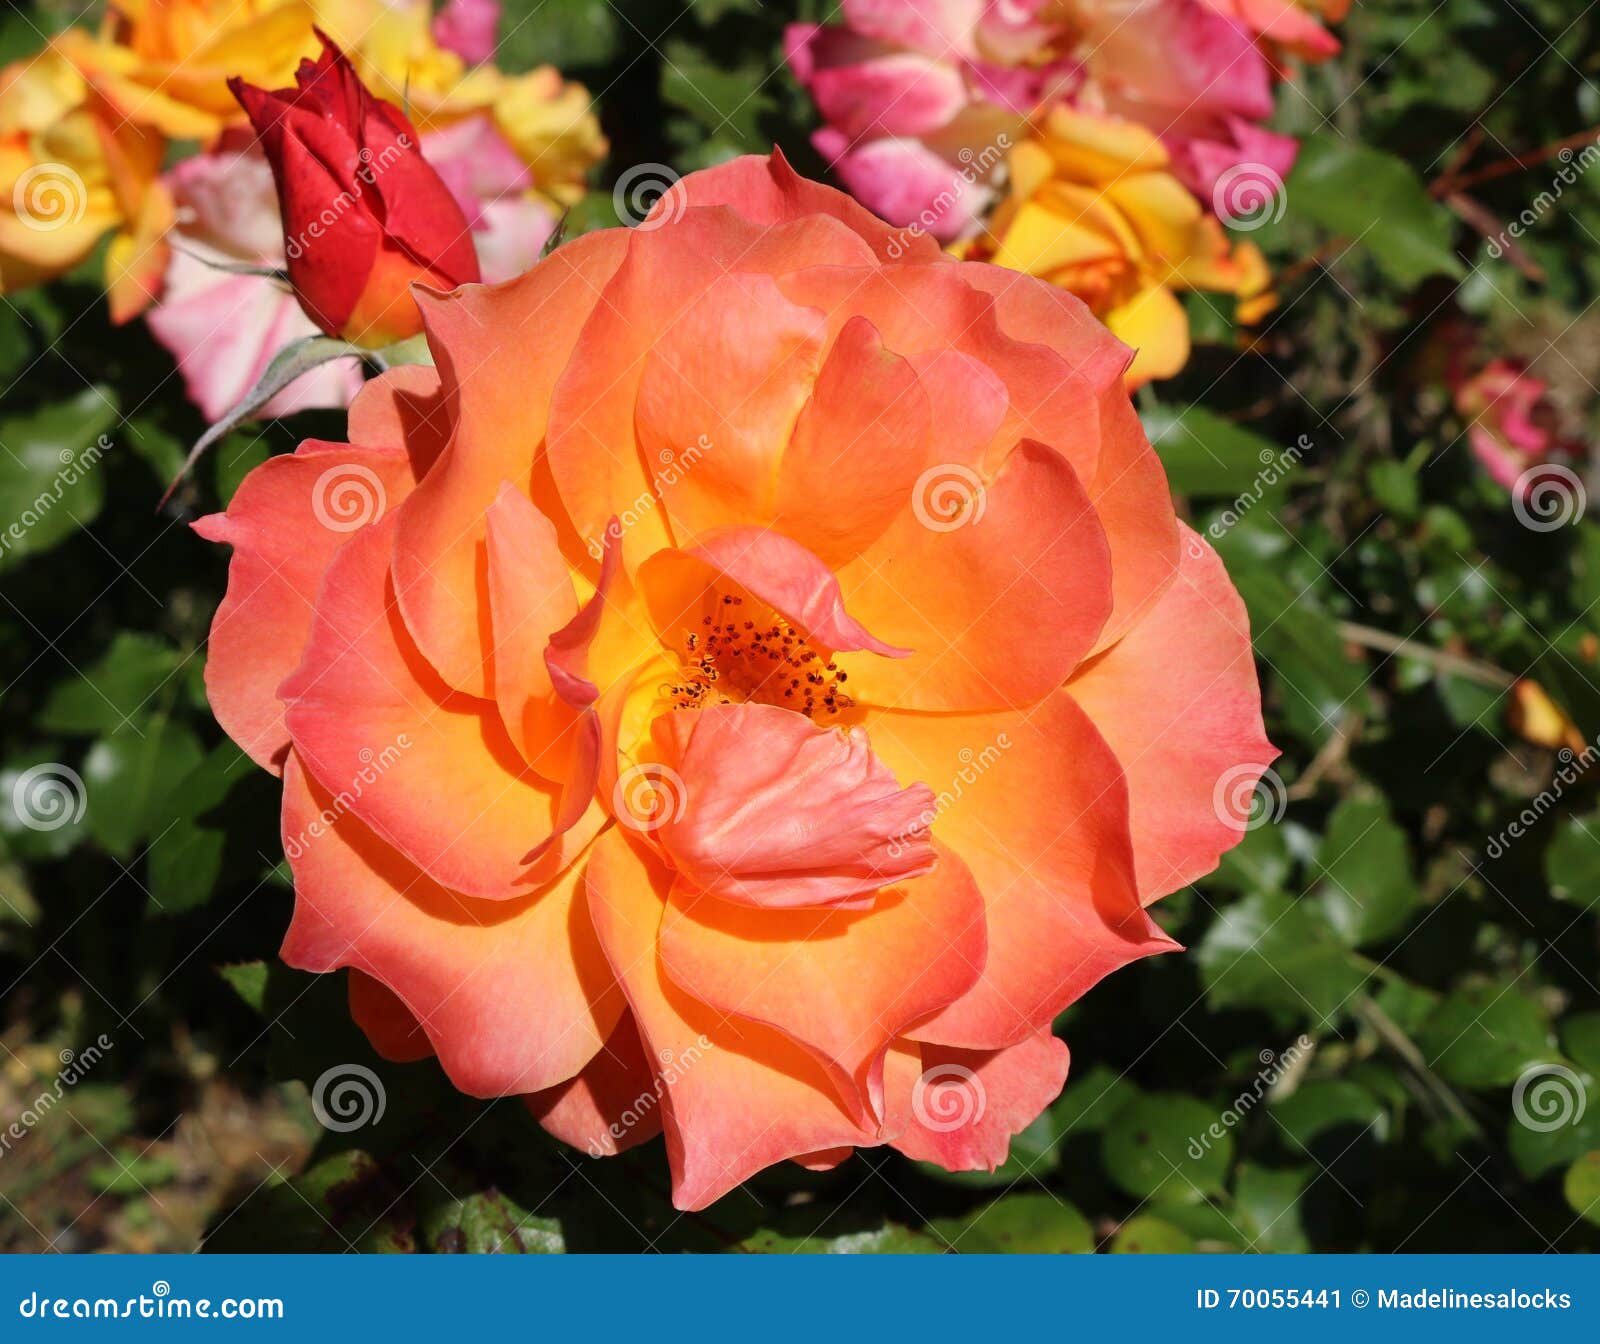 Sun Flare rose stock image. Image of orange, garden, flower - 70055441